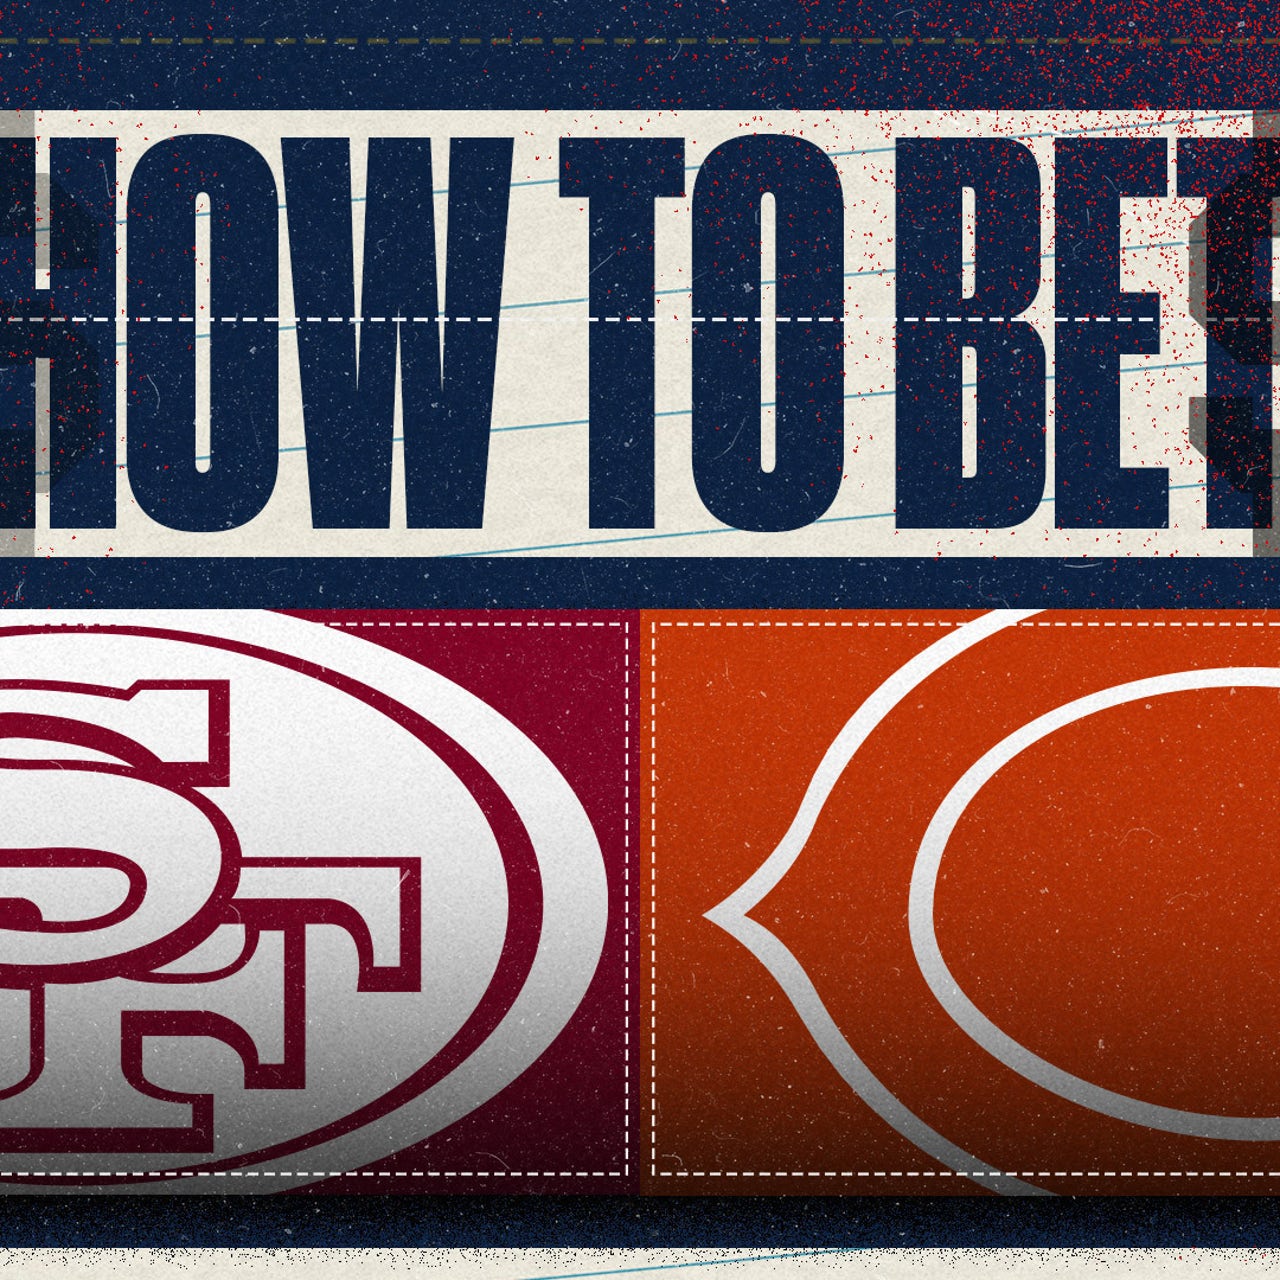 NFL odds Week 1: How to bet 49ers-Bears, pick